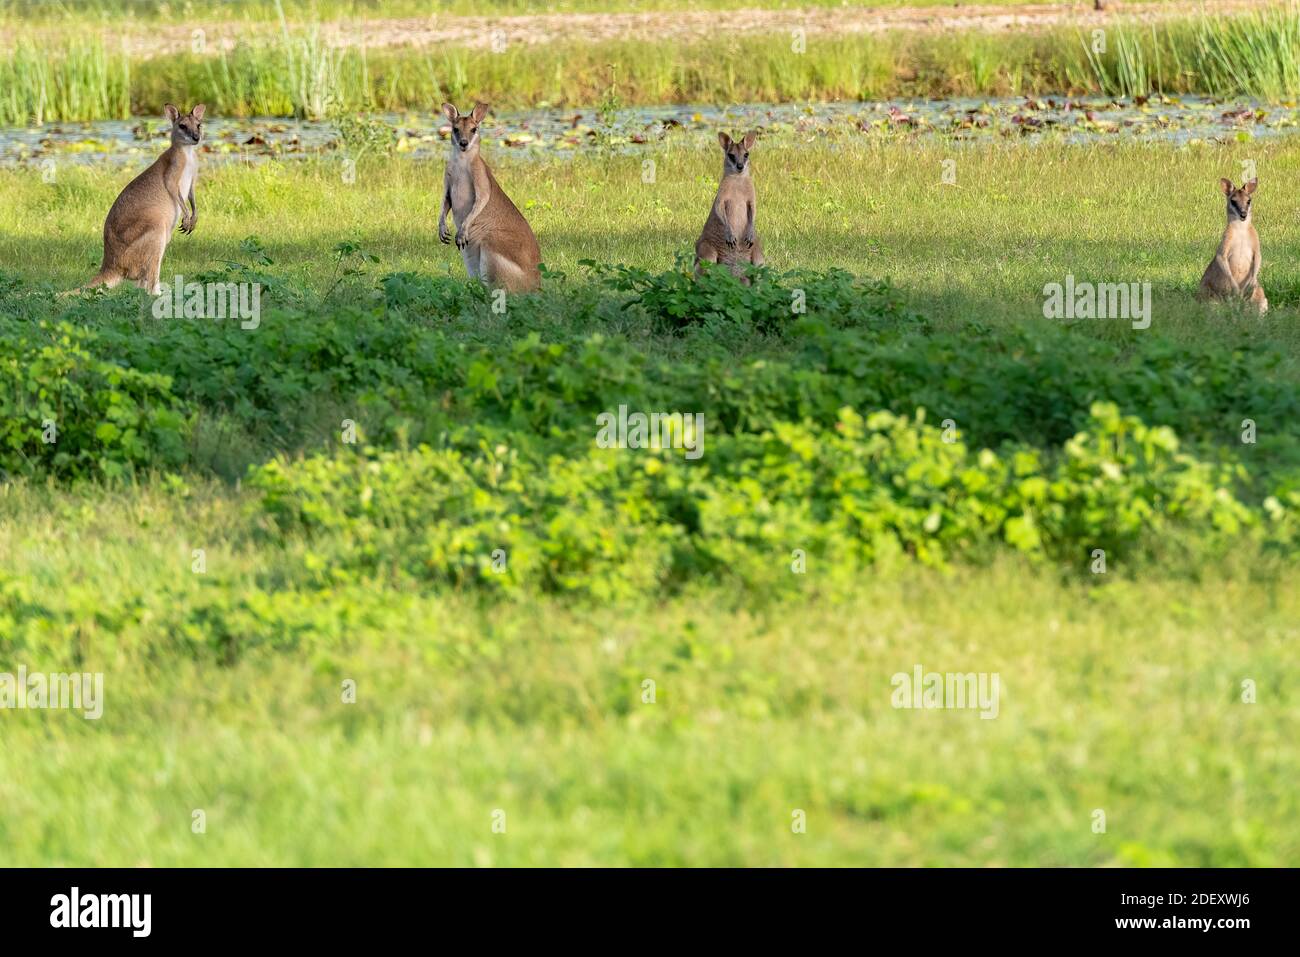 Wallabies in a field, Northern Territory, Australia. Stock Photo